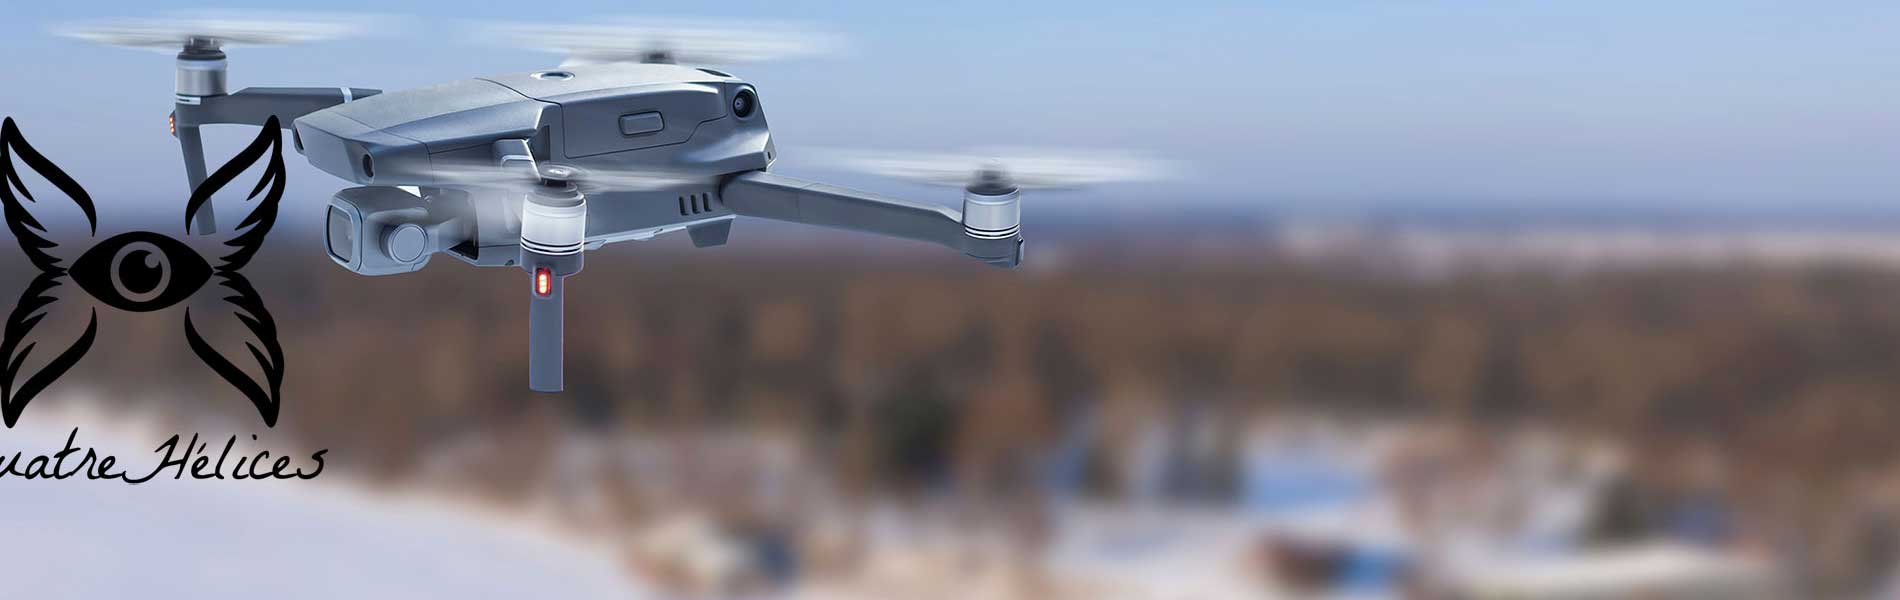 Tarif prestation drone thermique